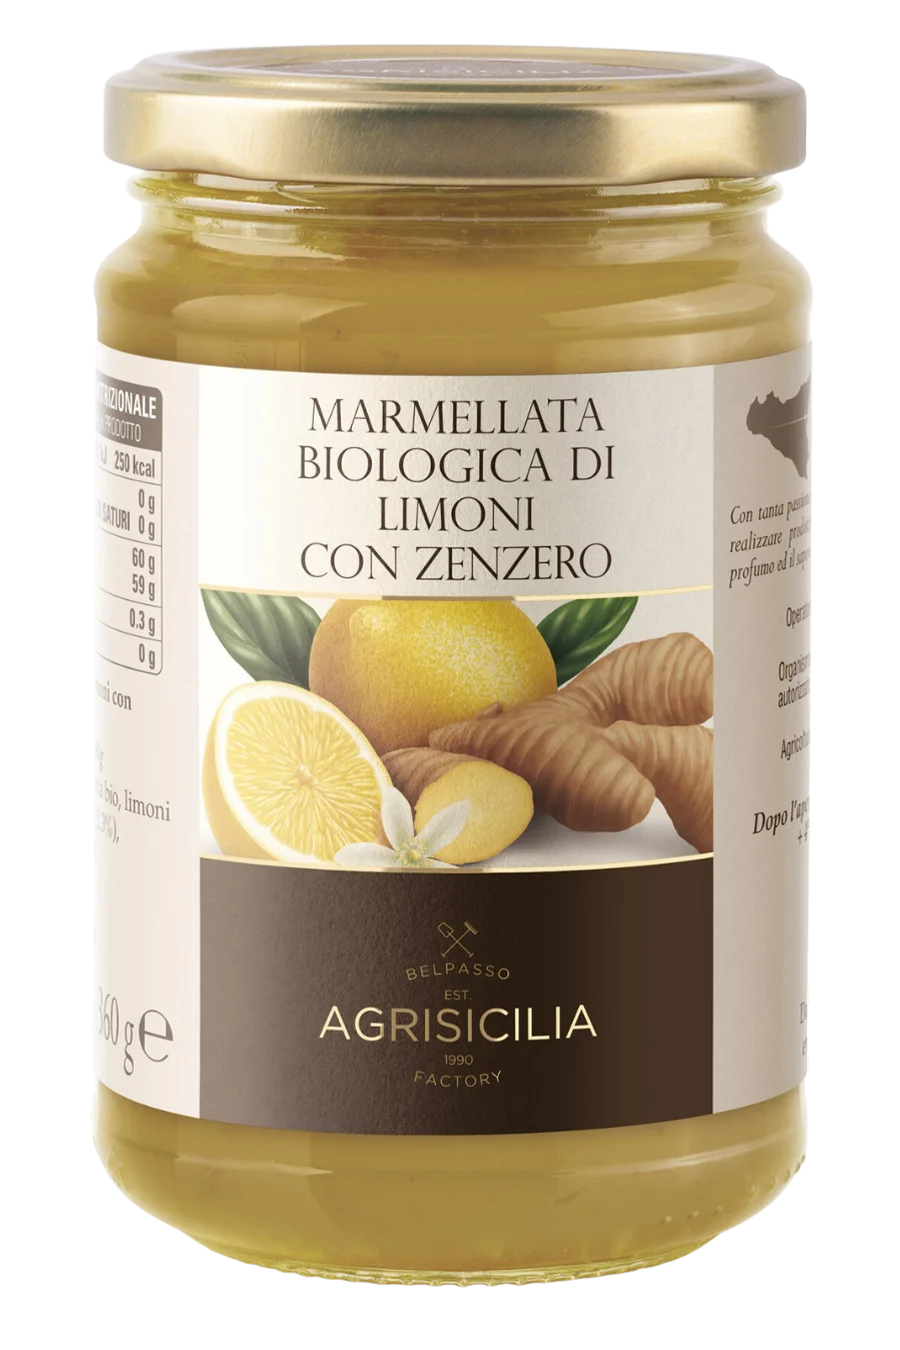 Jar of Organic Lemon Marmalade with Ginger AGRISICILIA